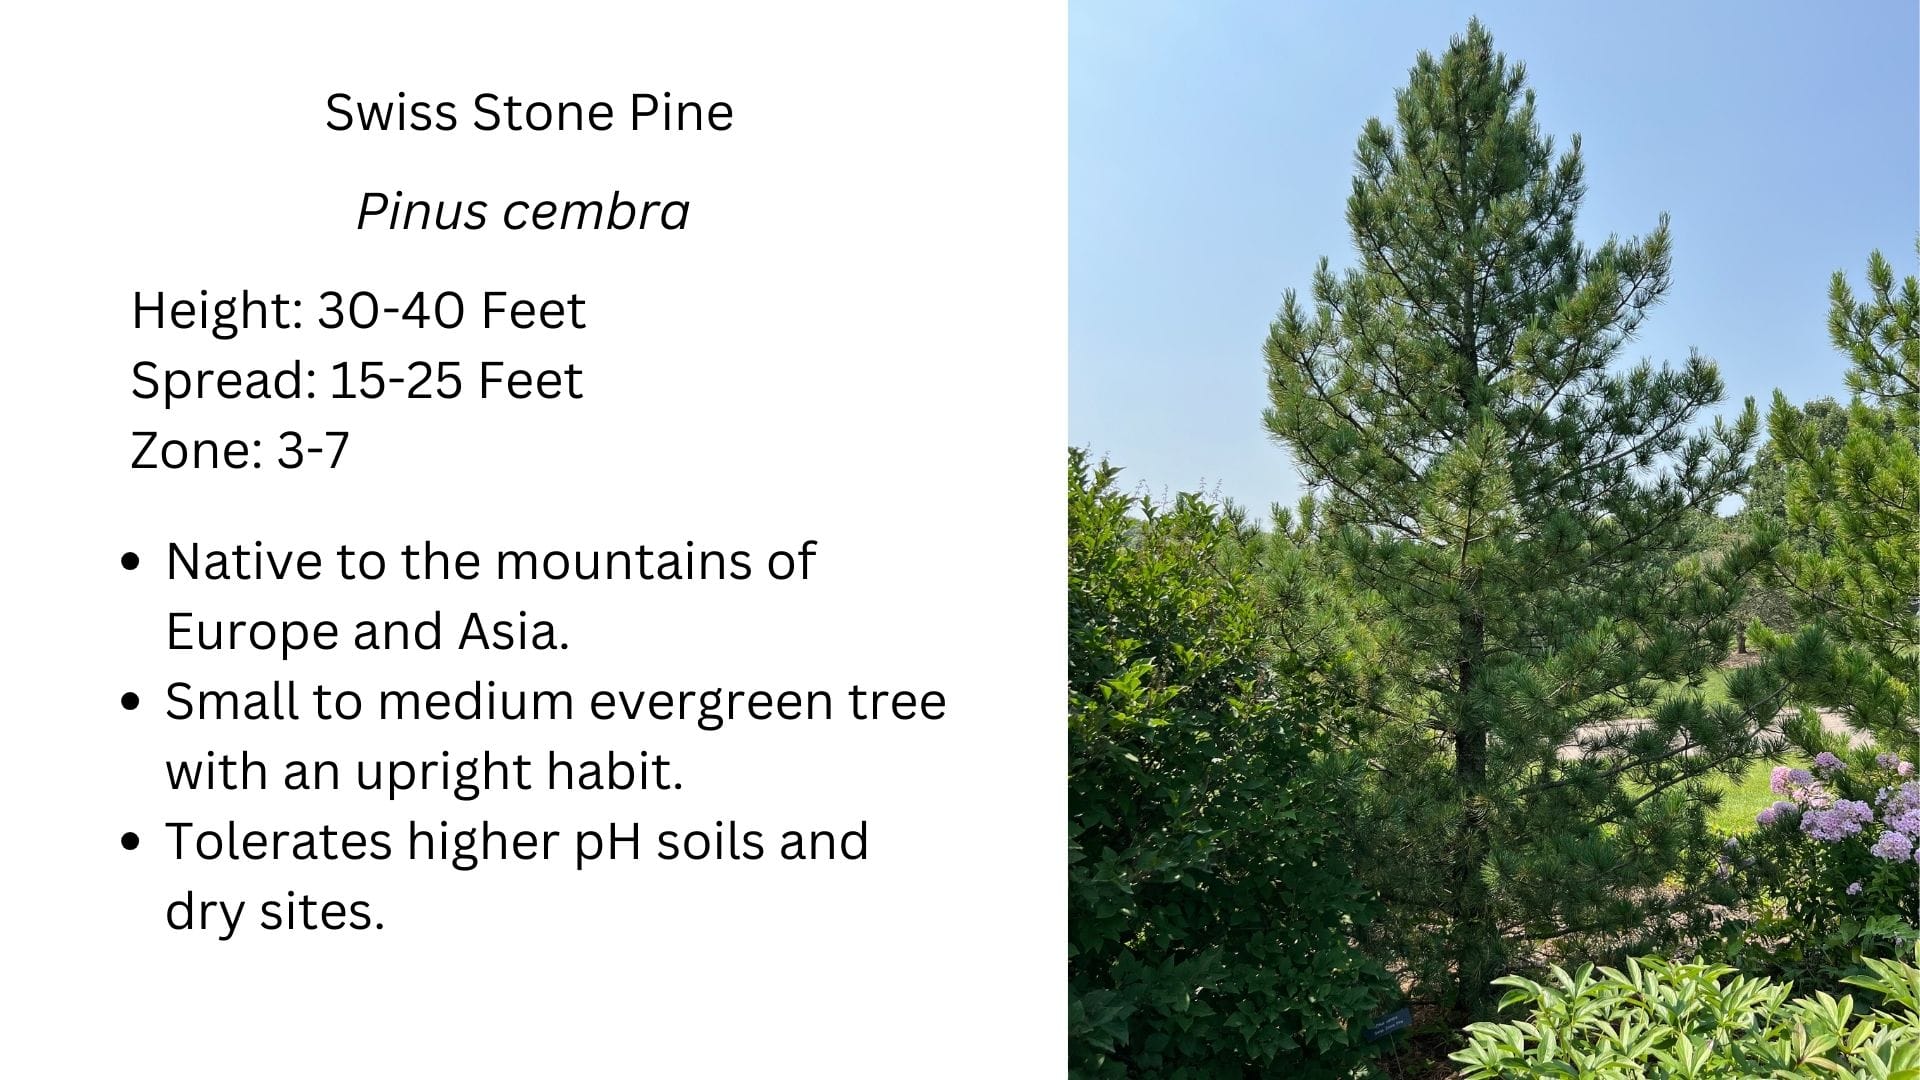 Swiss Stone Pine, Pinus cembra